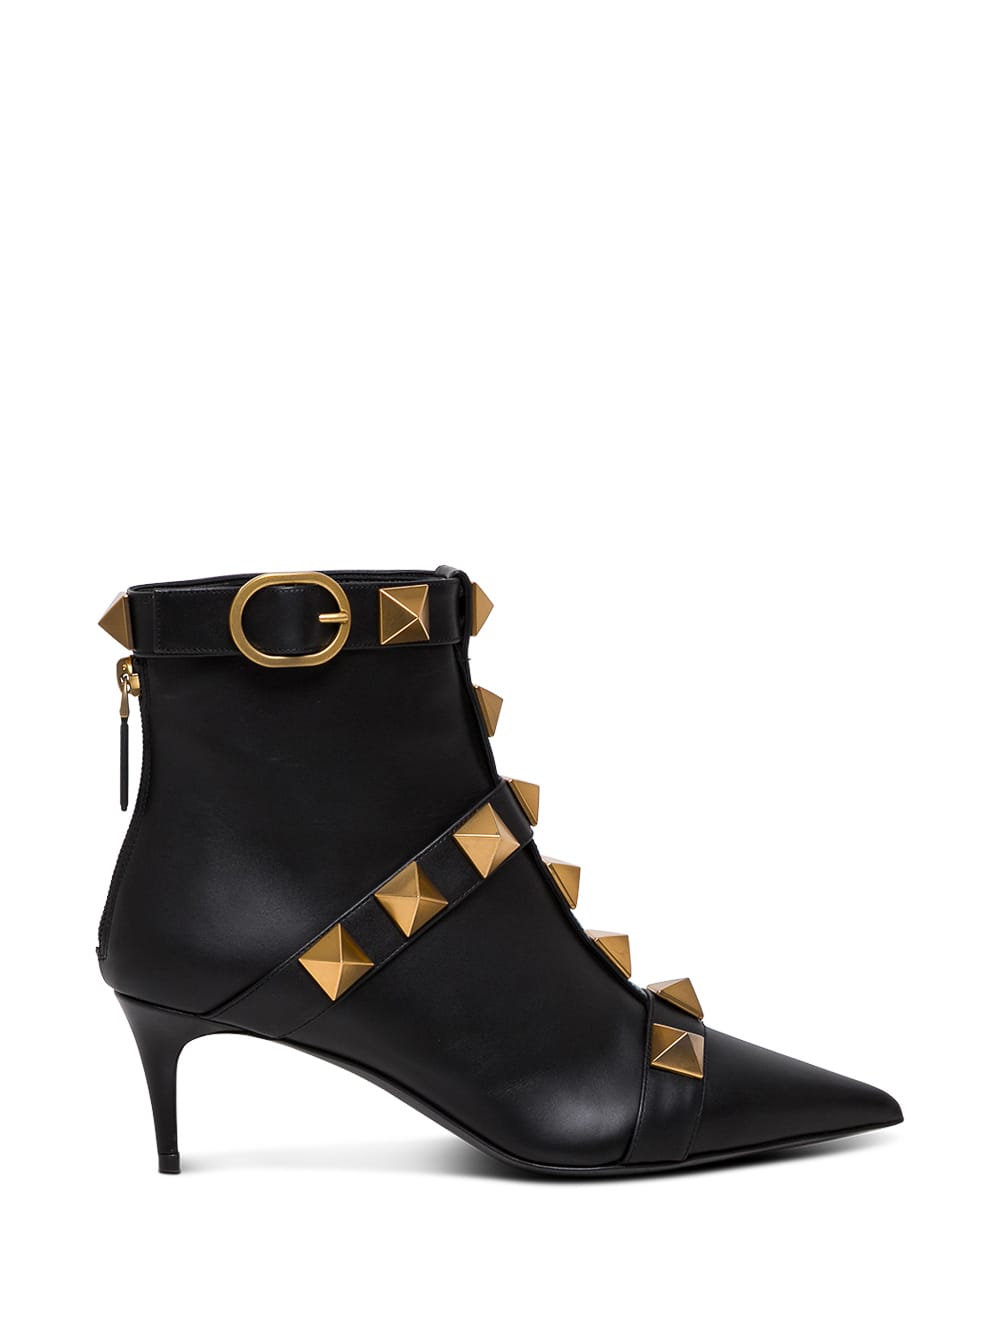 Valentino Garavani Rockstud Black Leather Ankle Boots With Antique Brass Studs